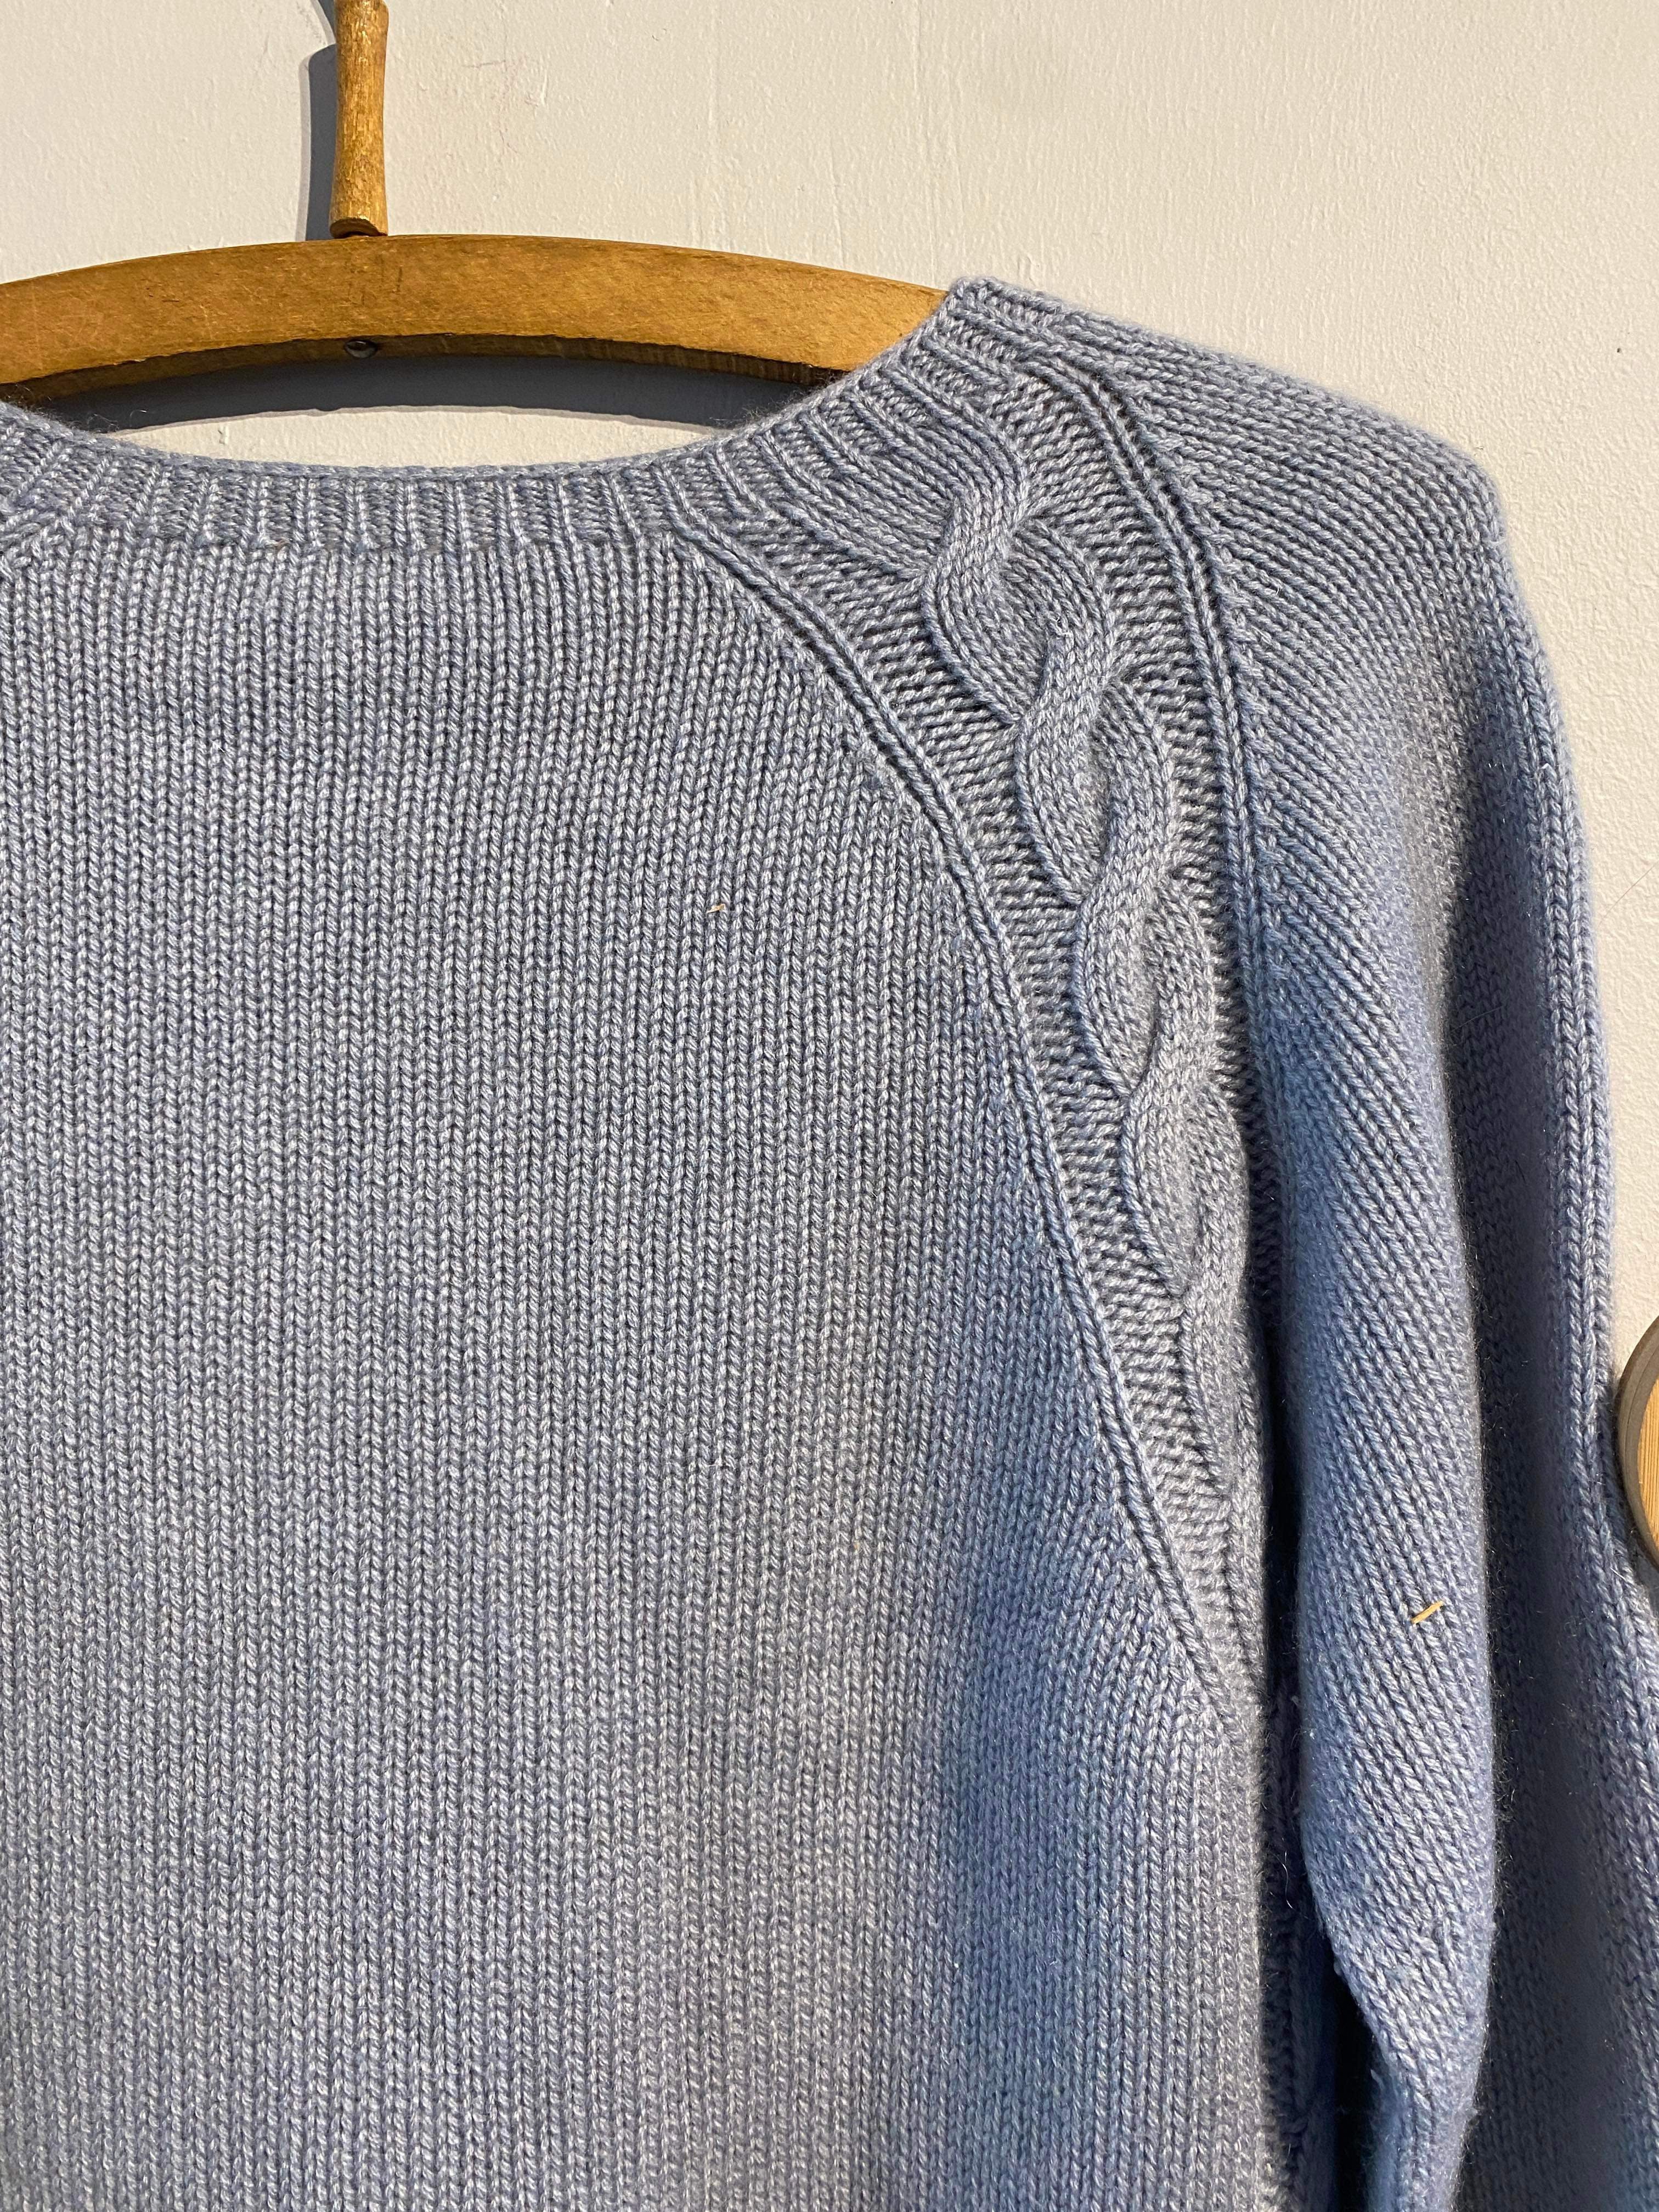 Max Mara - Sweater - Size: S